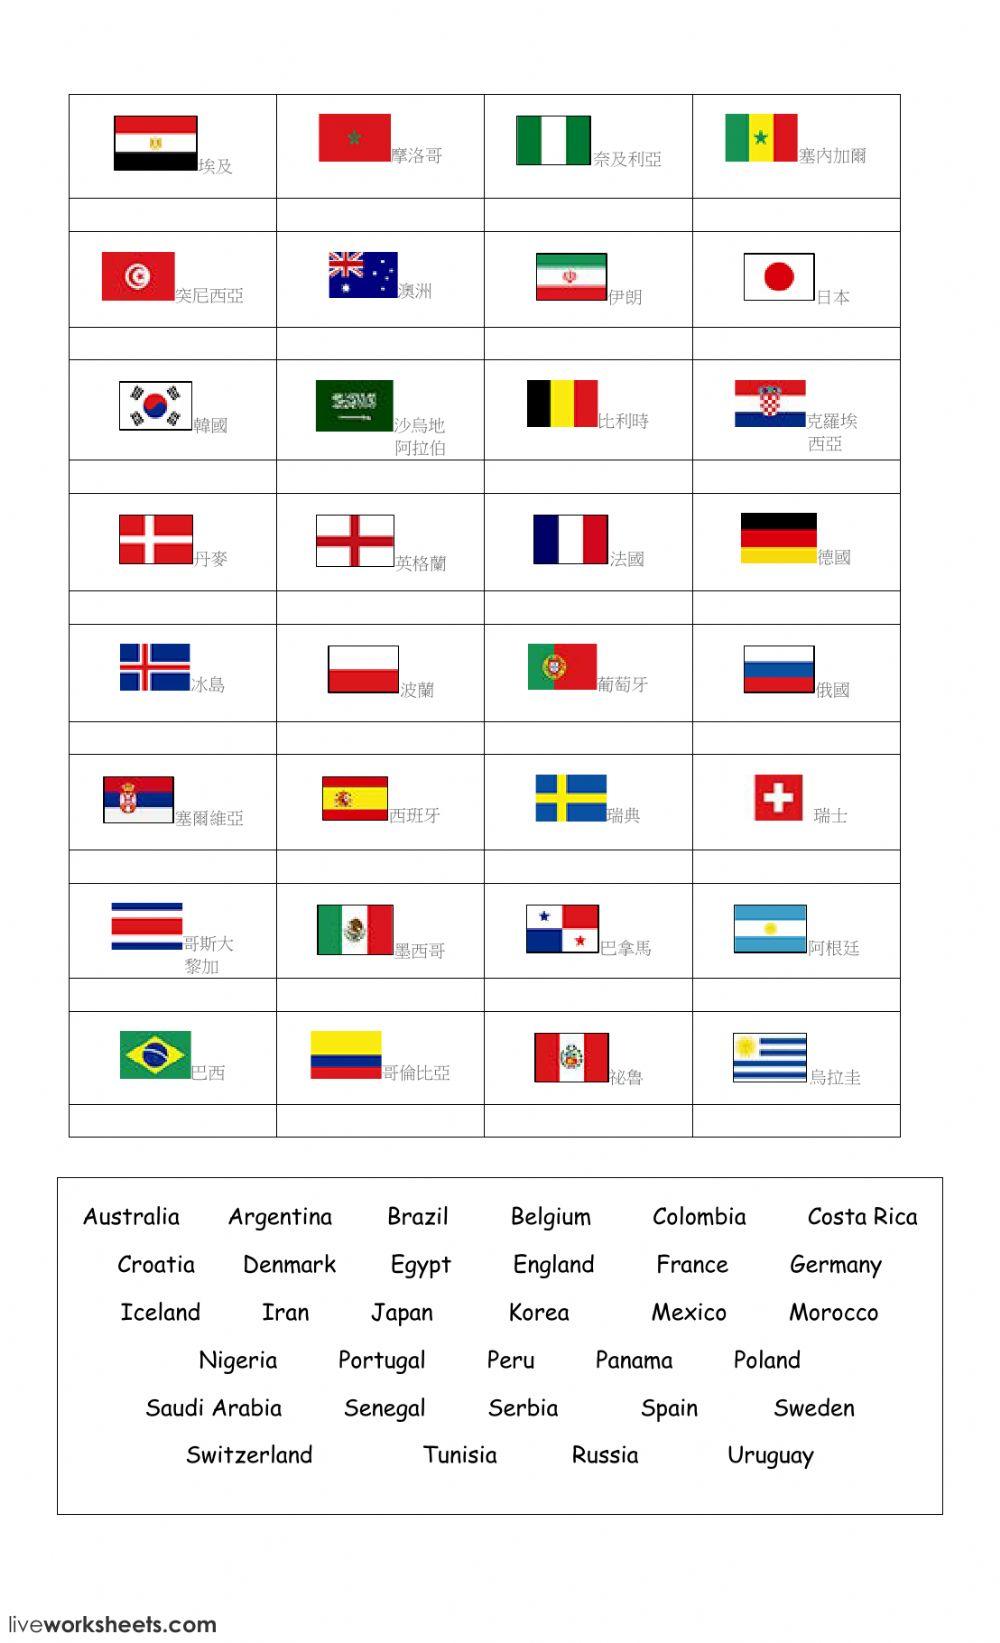 2018 FIFA Countries